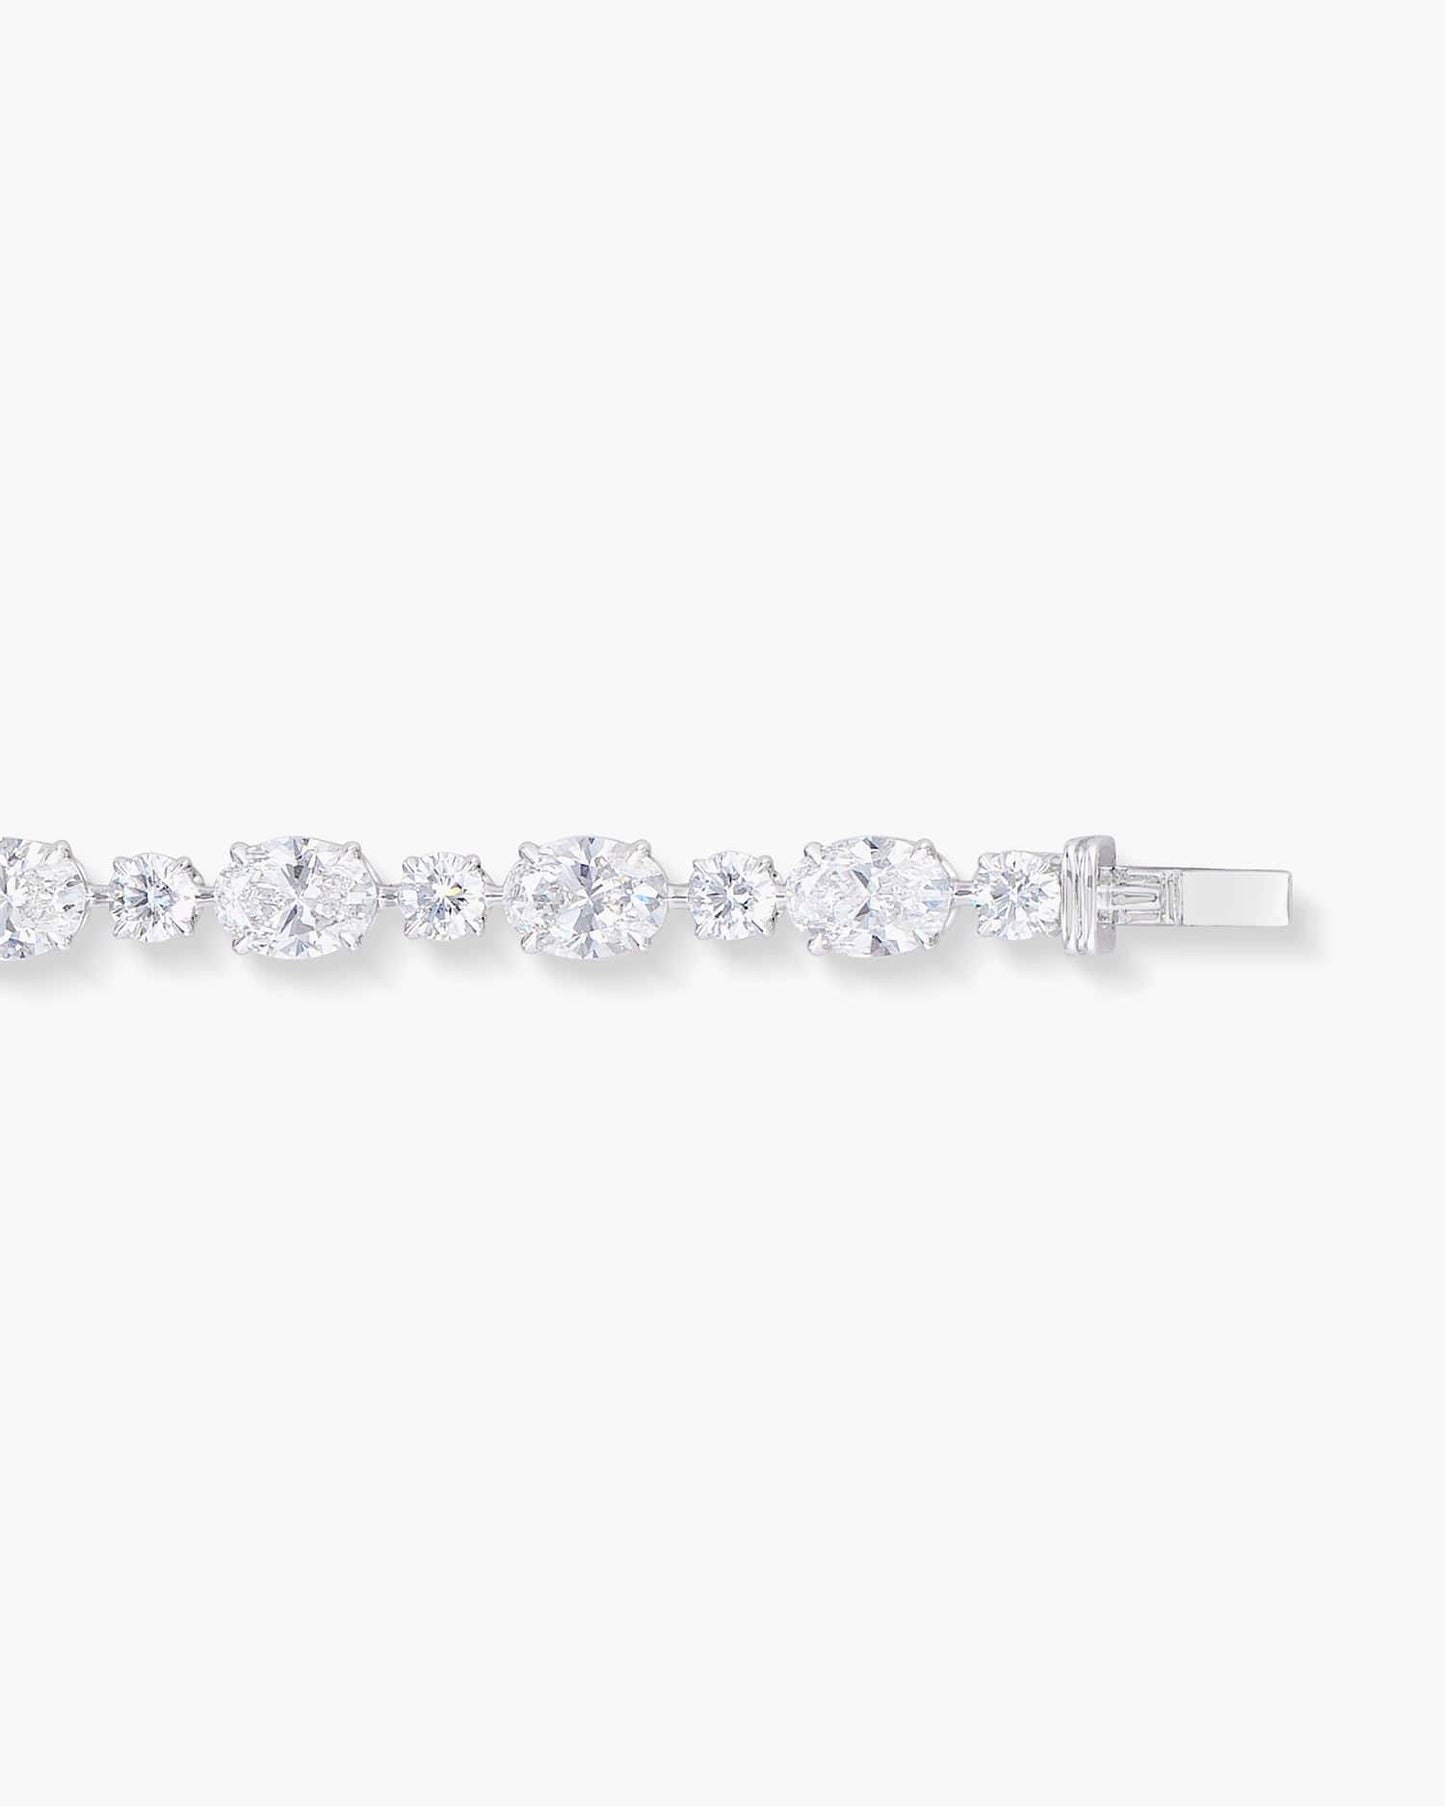 Oval Shape and Round Brilliant Cut Diamond Bracelet (0.70 carat)